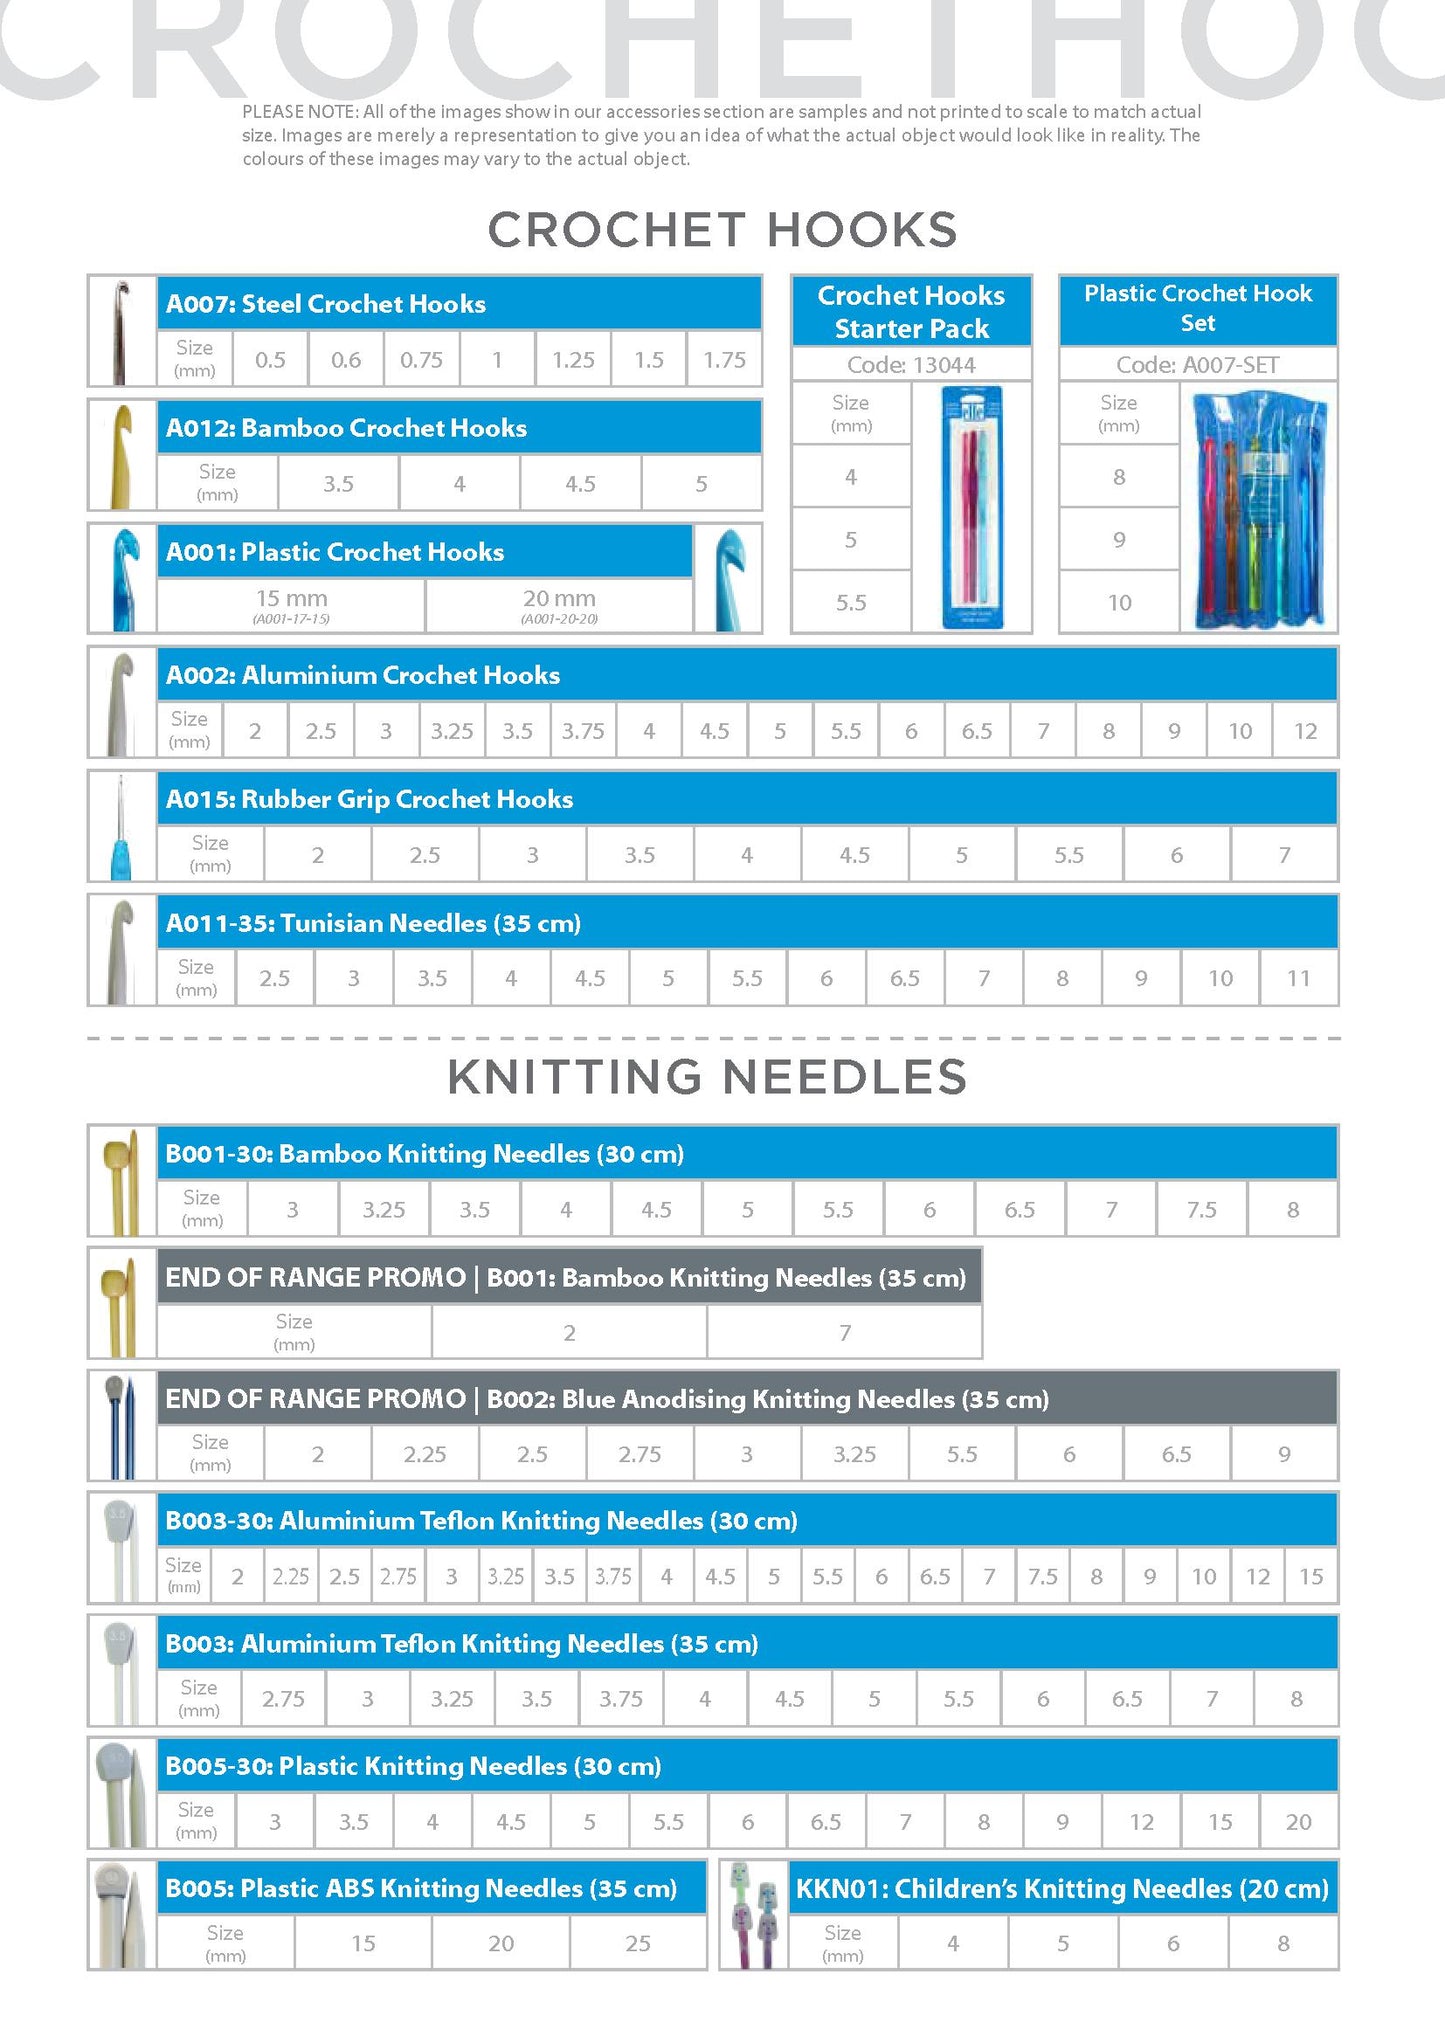 Aluminium Teflon Knitting Needles 30cm